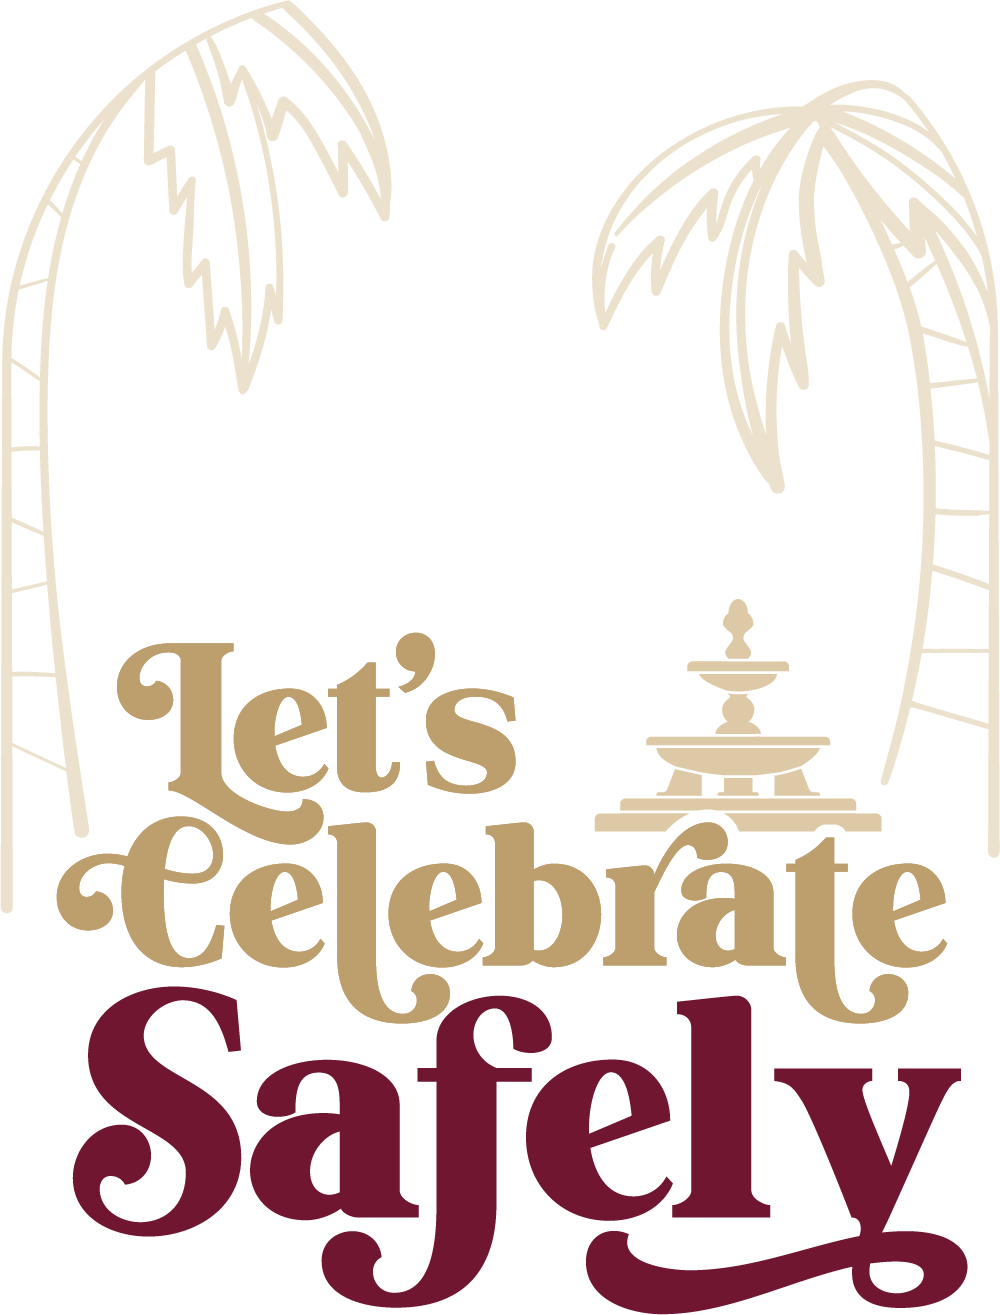 Let's Celebrate Safely